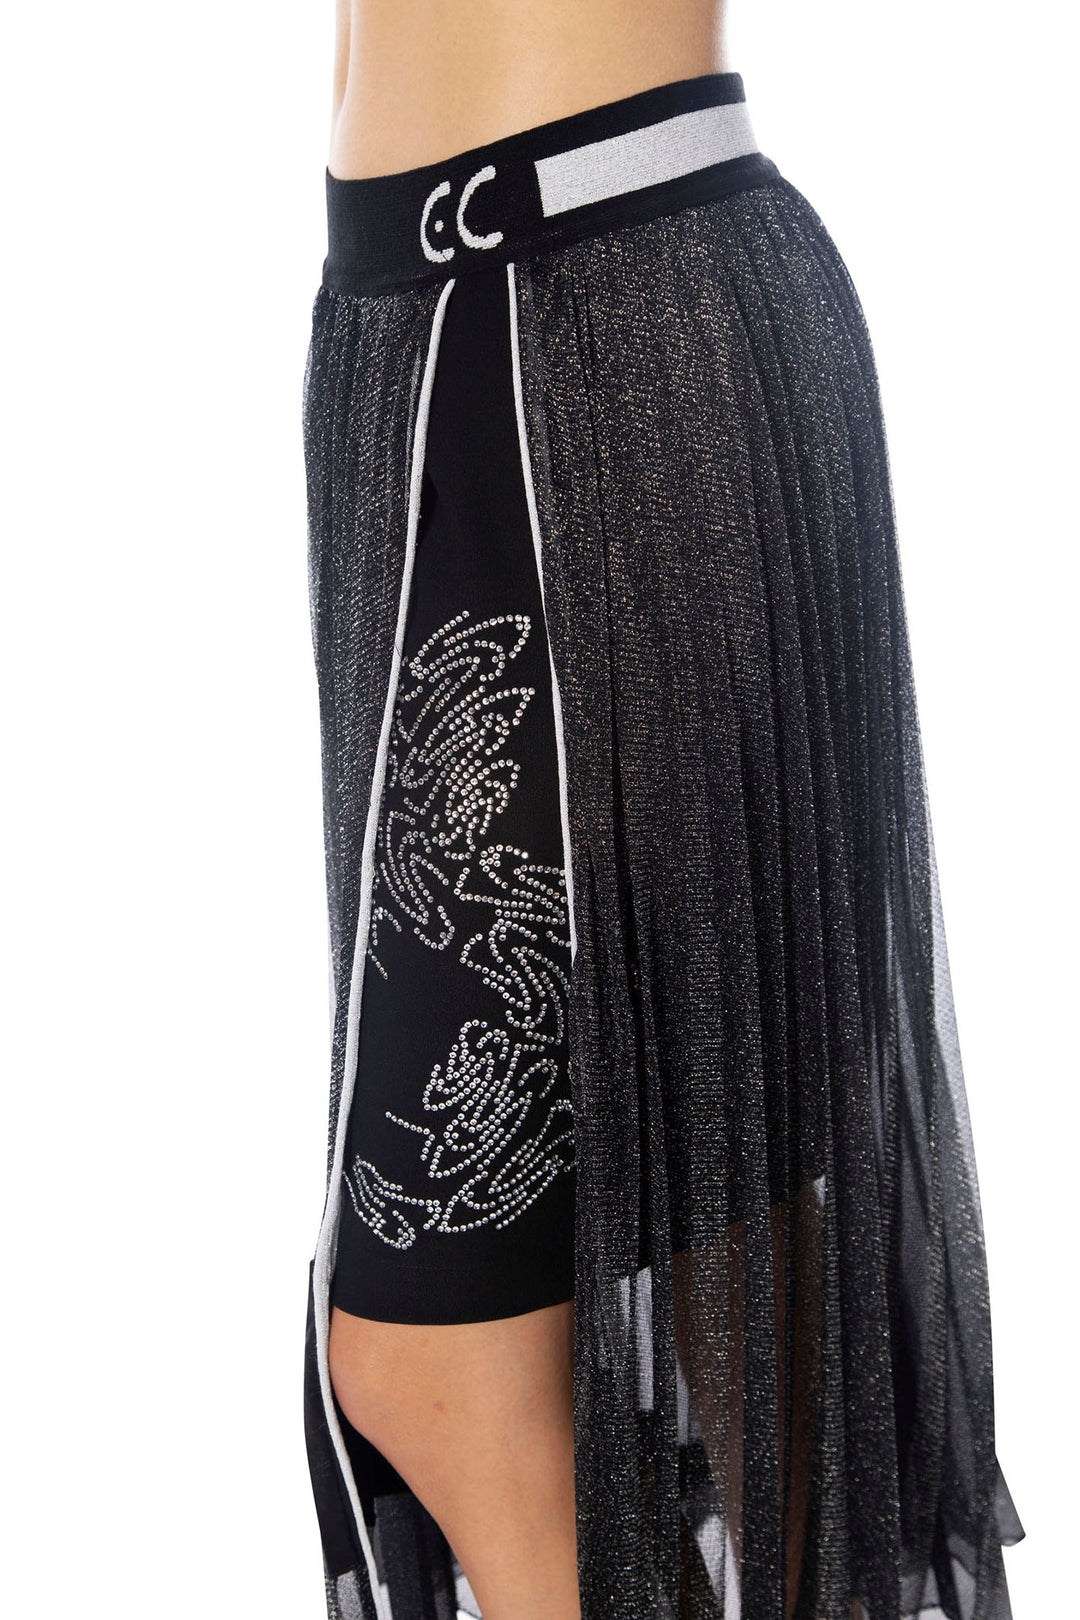 Elisa Cavaletti EJP243046900 Black Layered Skirt - Experience Boutique